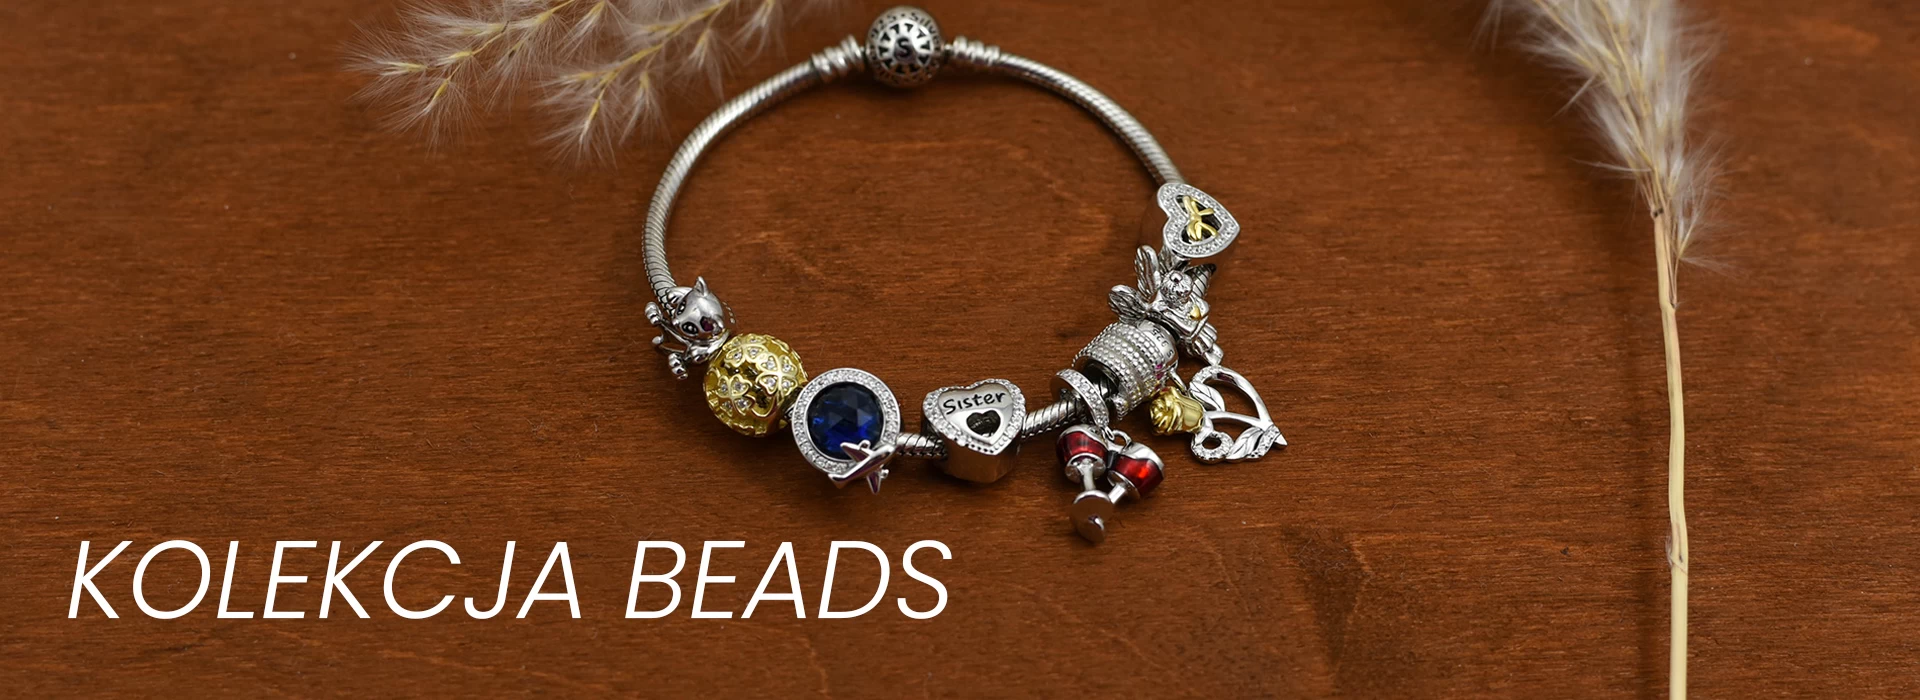 Kolekcja Beads